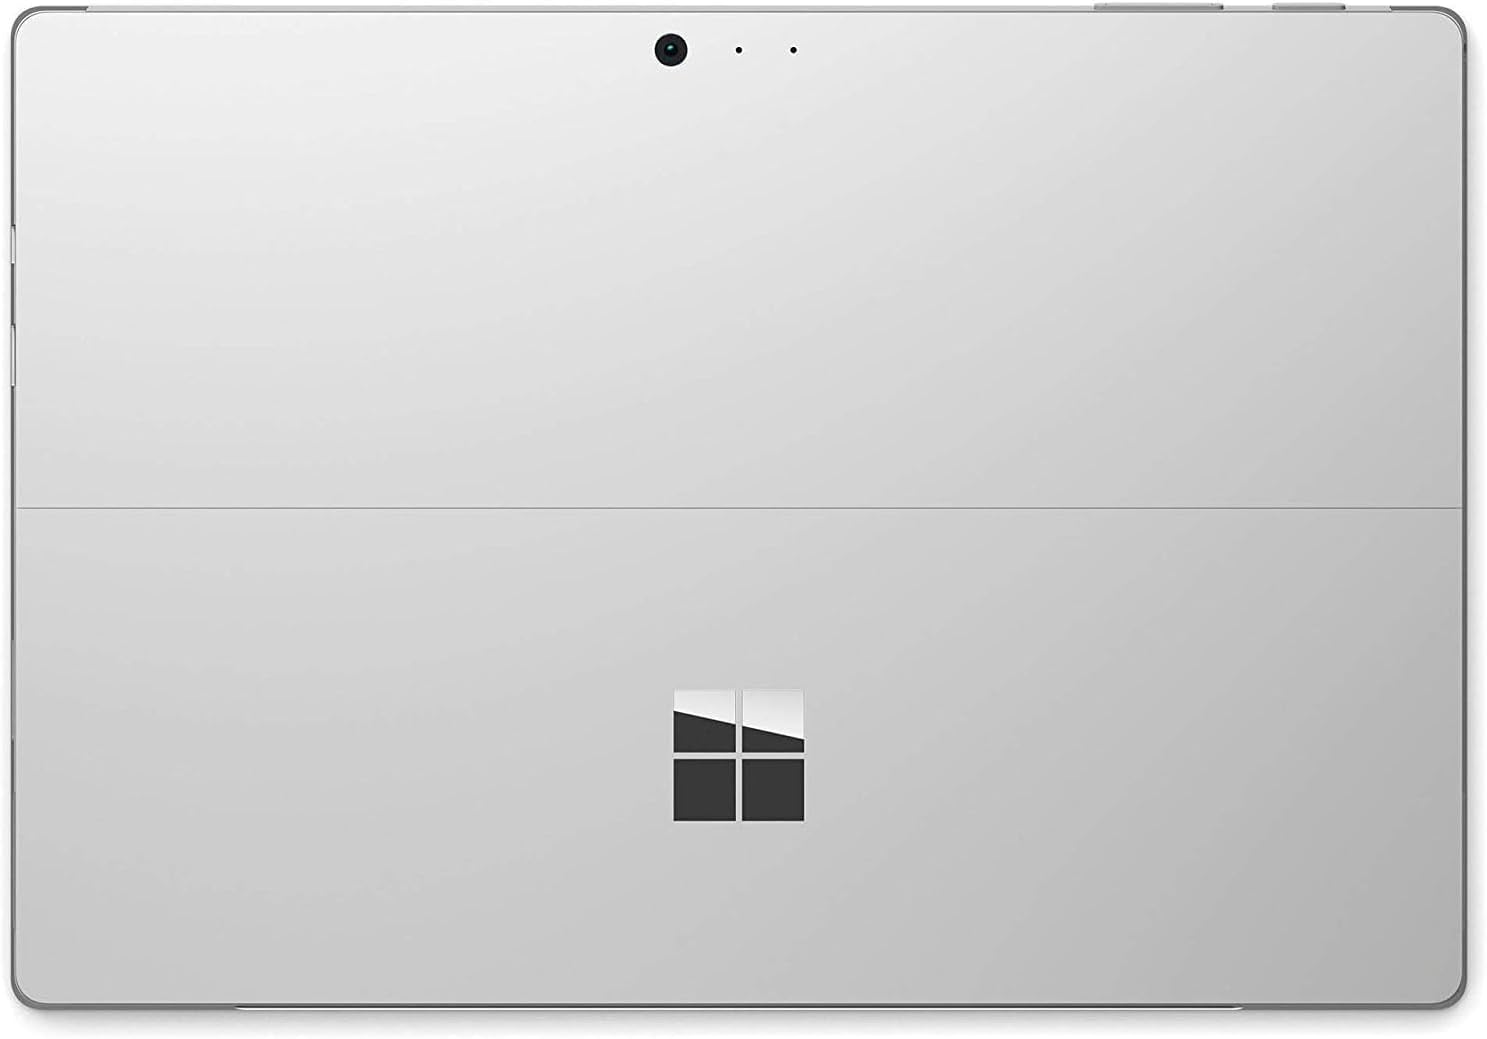 Microsoft Surface Pro 5 Tablet,12.3 inch (2736 x 1824), Intel Core i5-7300U 2.6 GHz, 8 GB RAM 256GB SSD, Touchscreen,Backlit Keyboard,CAM, Win 10 Pro (Renewed)